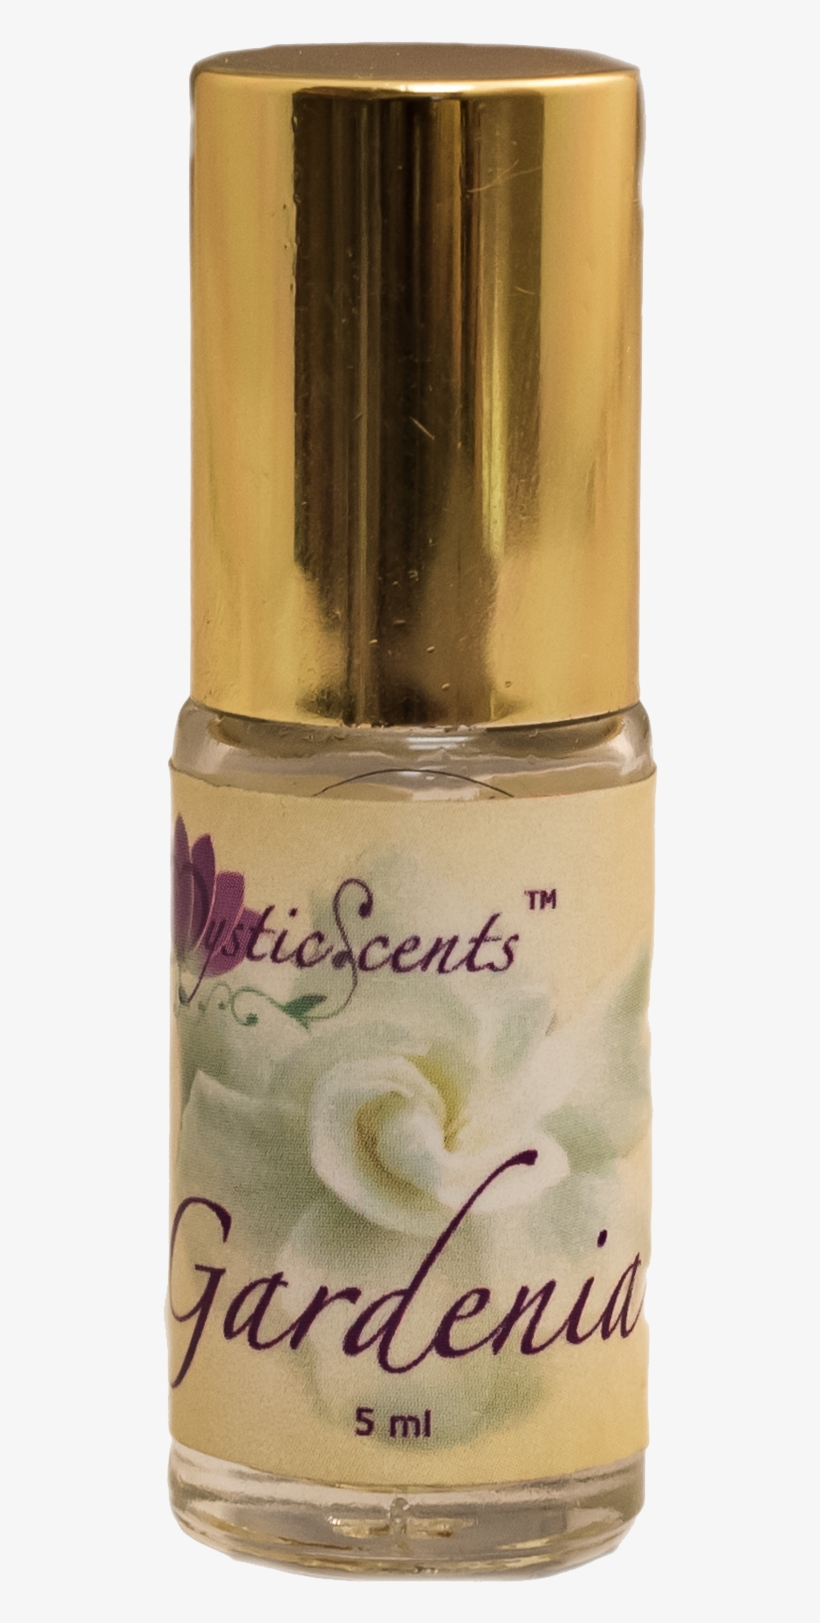 Gardenia - Mystic Scents Essential Oils, transparent png #2878751